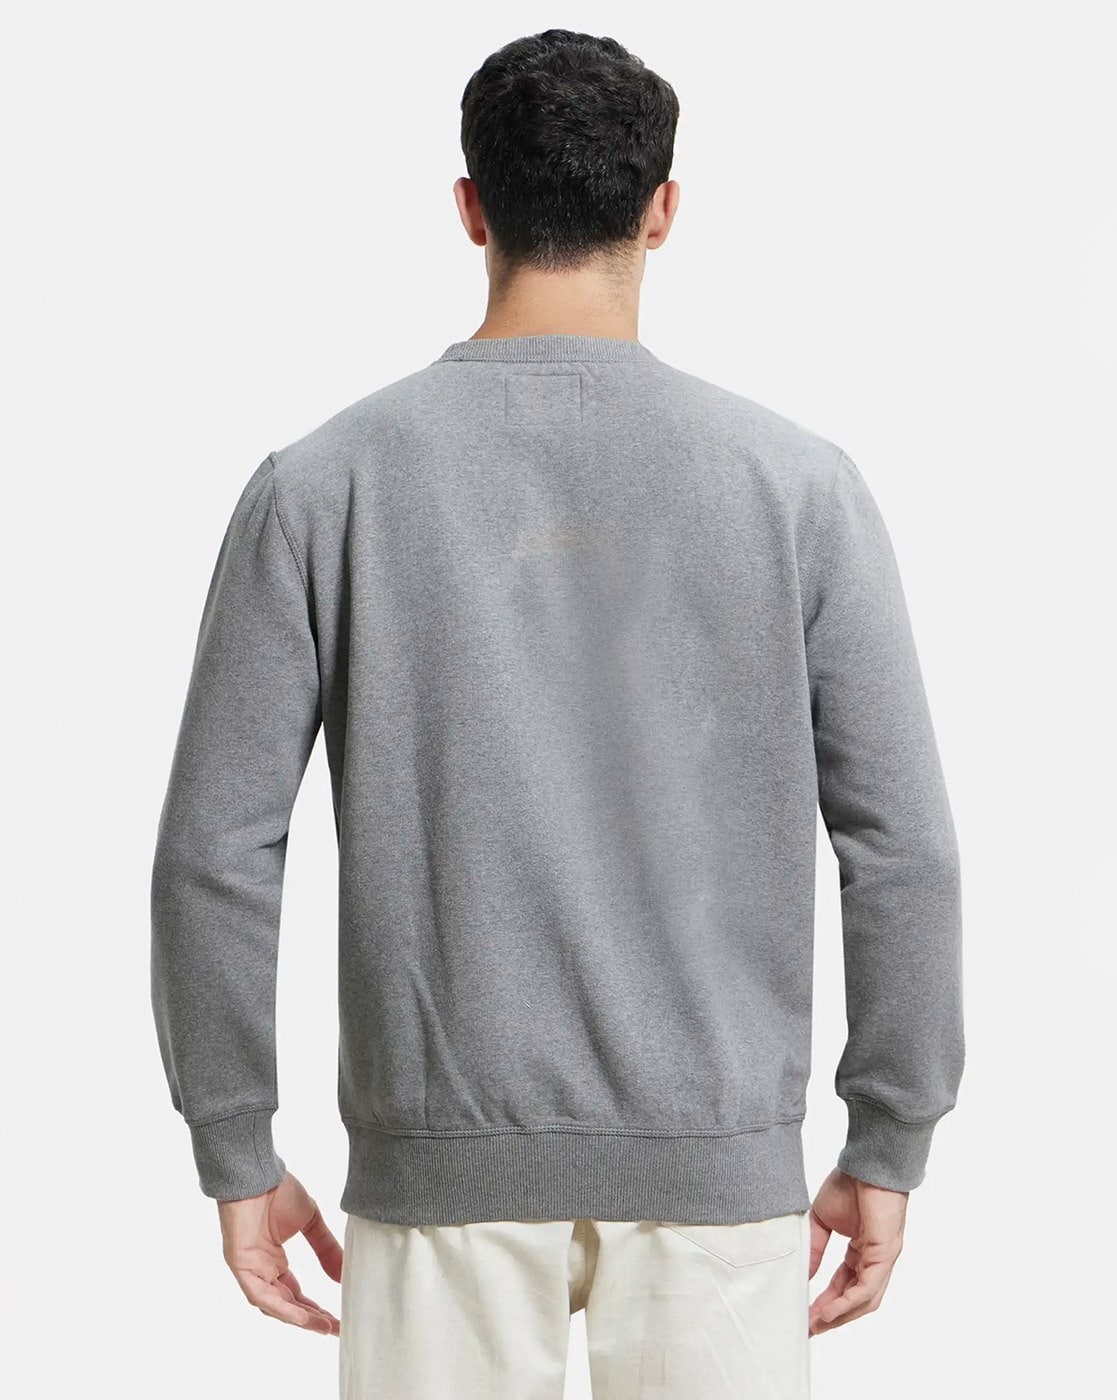 Buy Men's Super Combed Cotton Rich Fleece Fabric Sweatshirt with Stay Warm  Treatment - Ink Blue Melange US92